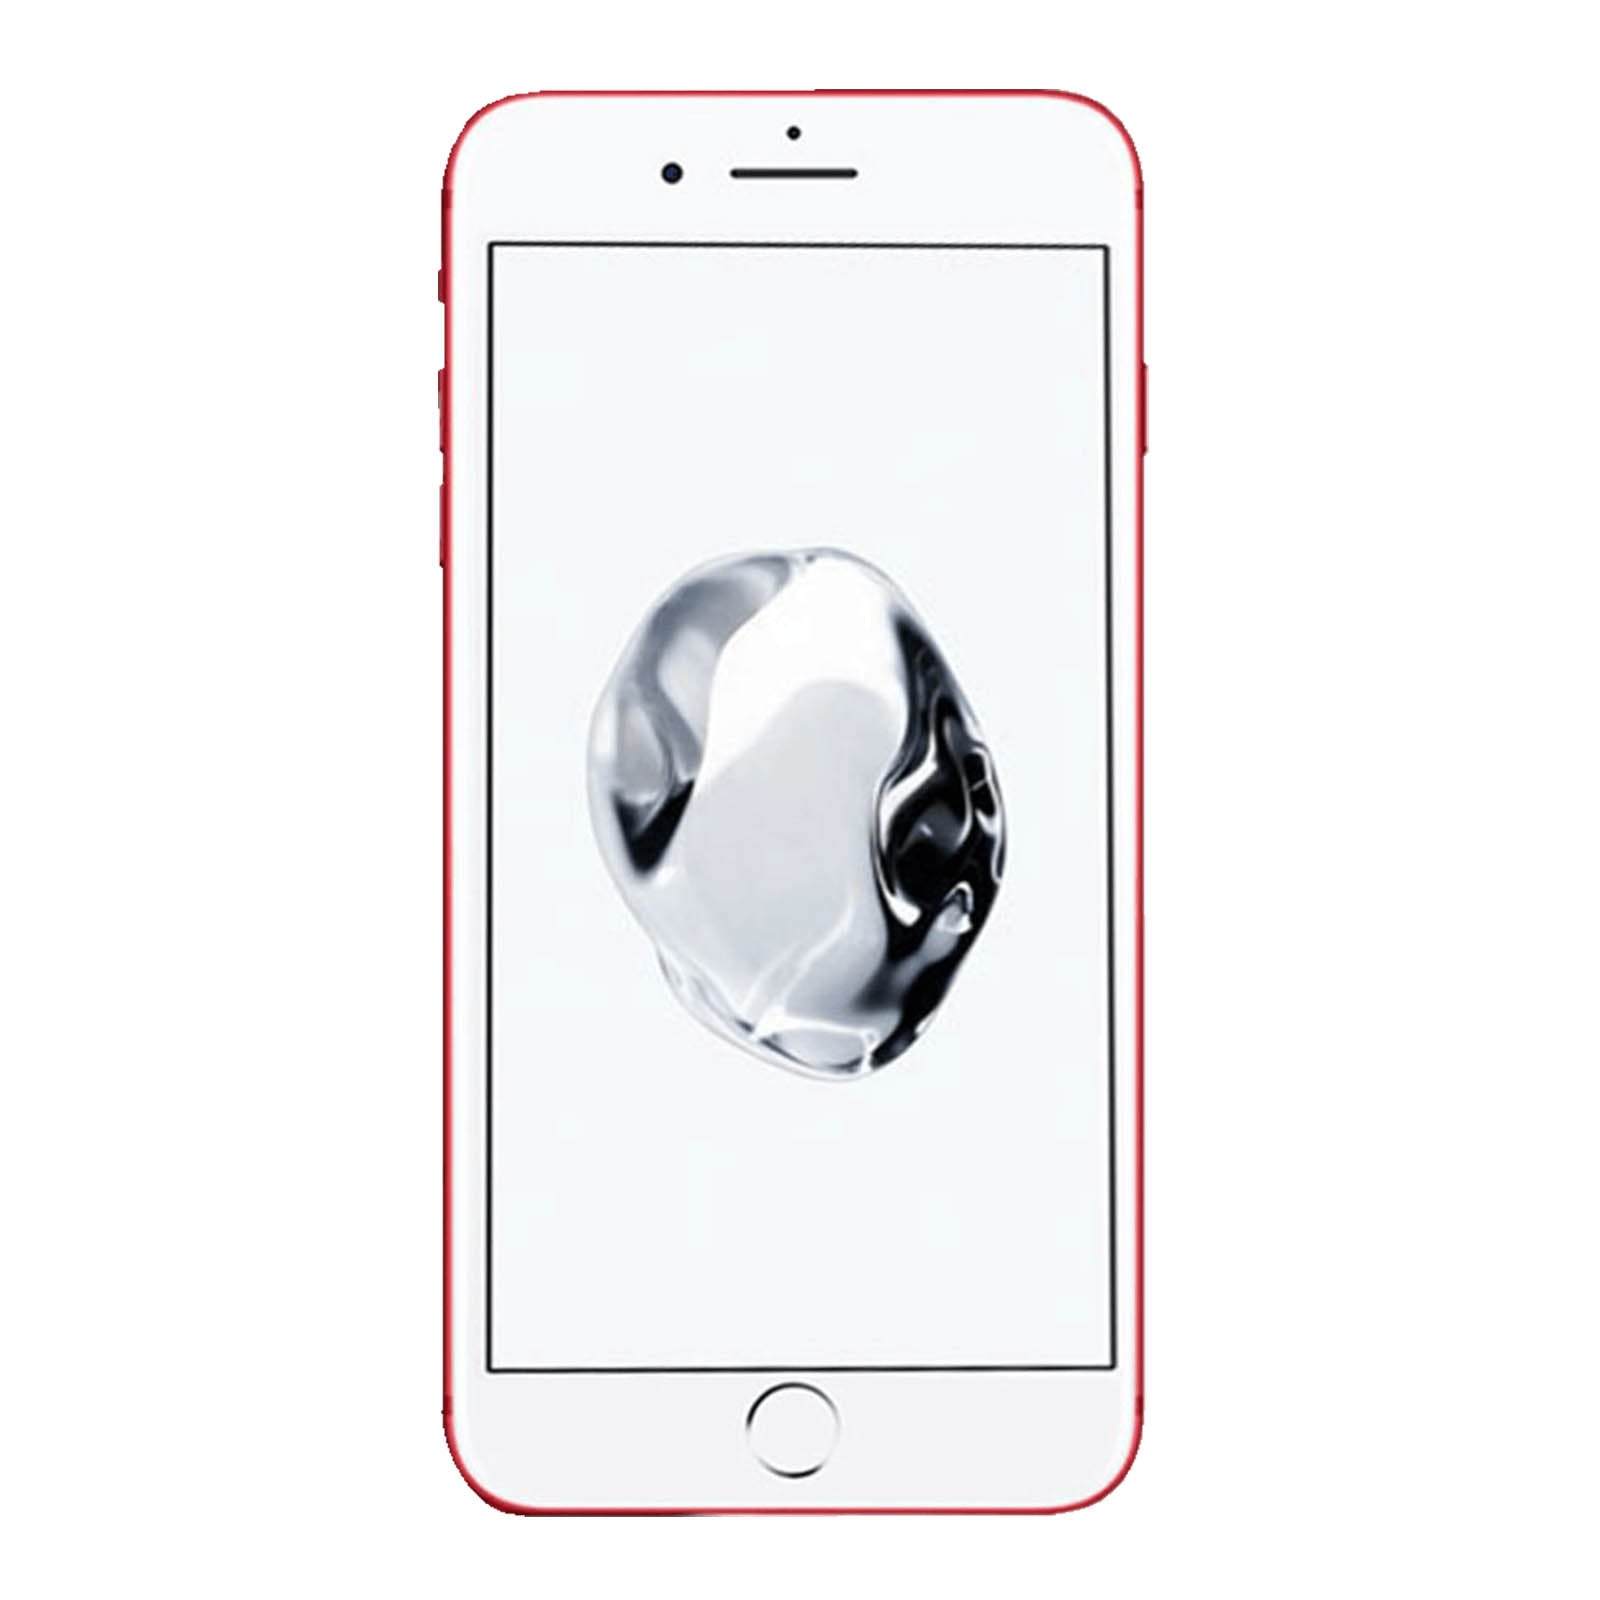 Apple iPhone 7 Plus 128GB Rosso Discreto Sbloccato